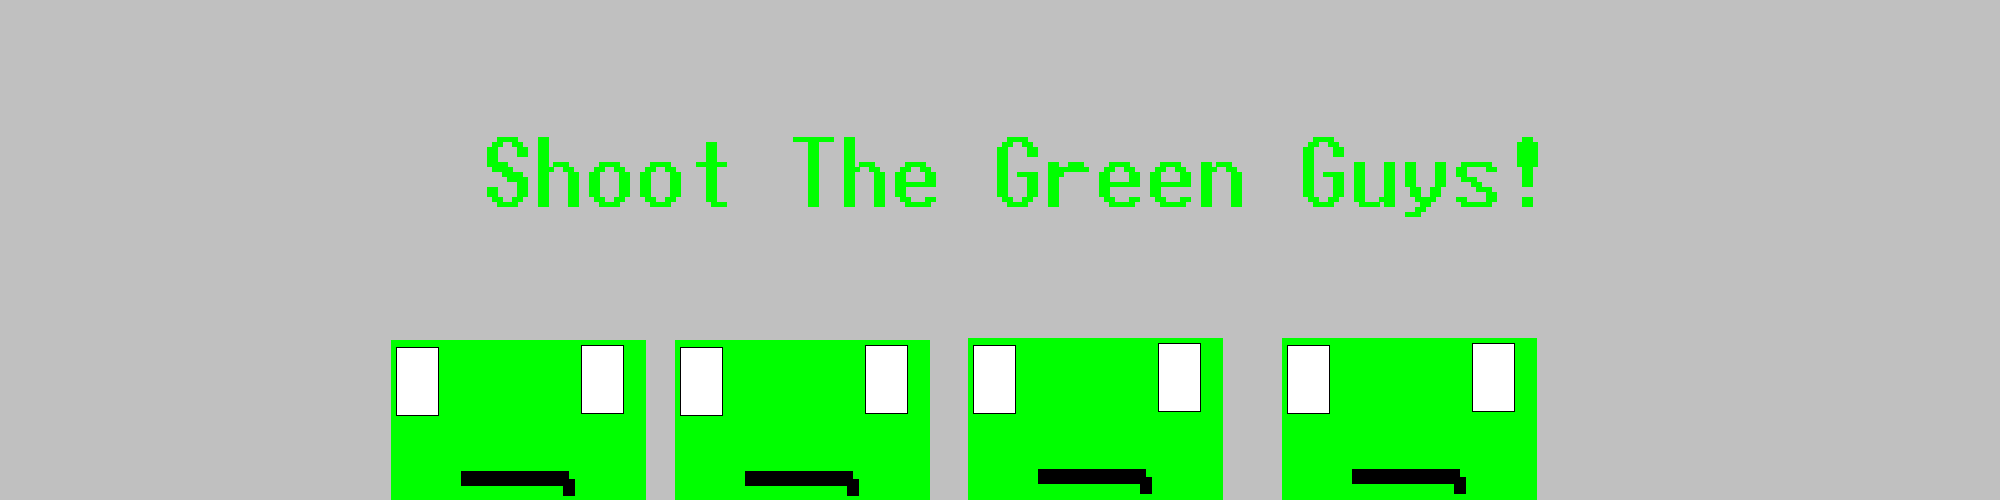 Shoot The Green Guys